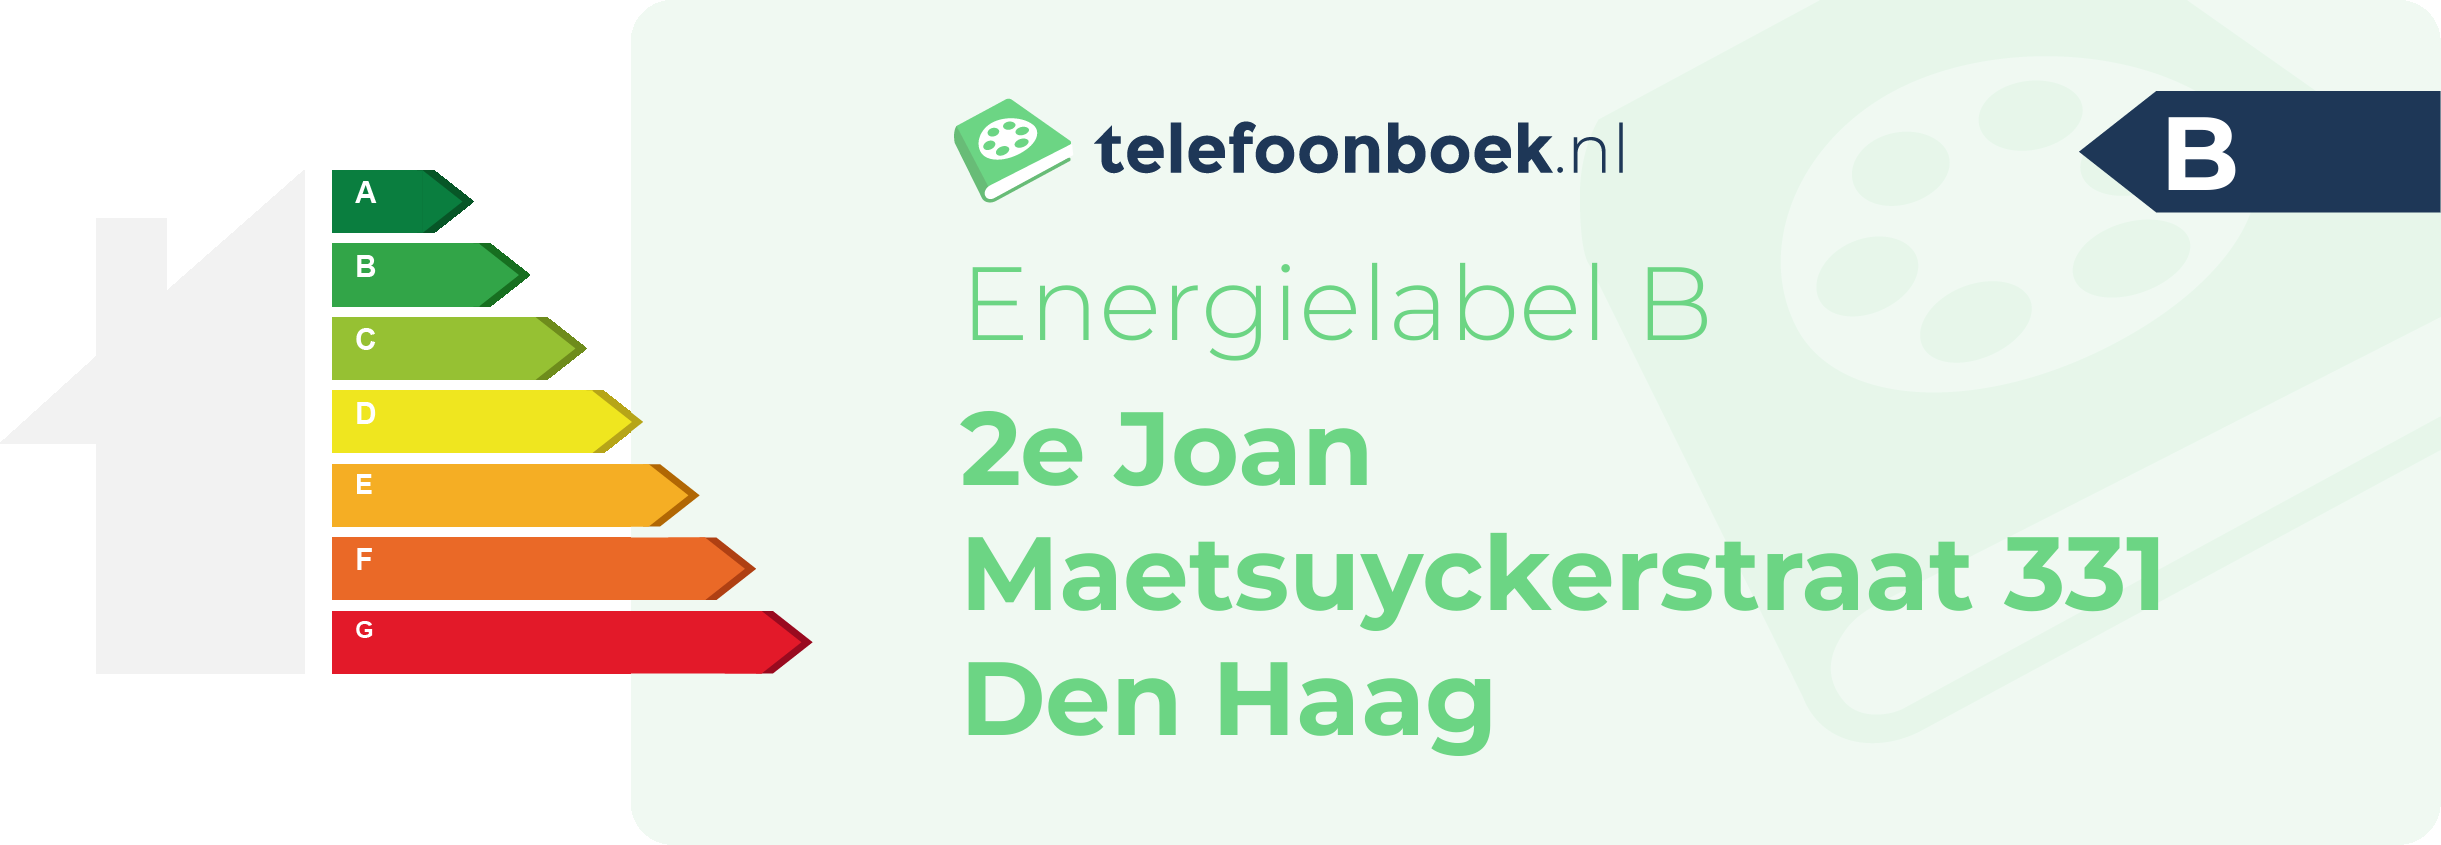 Energielabel 2e Joan Maetsuyckerstraat 331 Den Haag